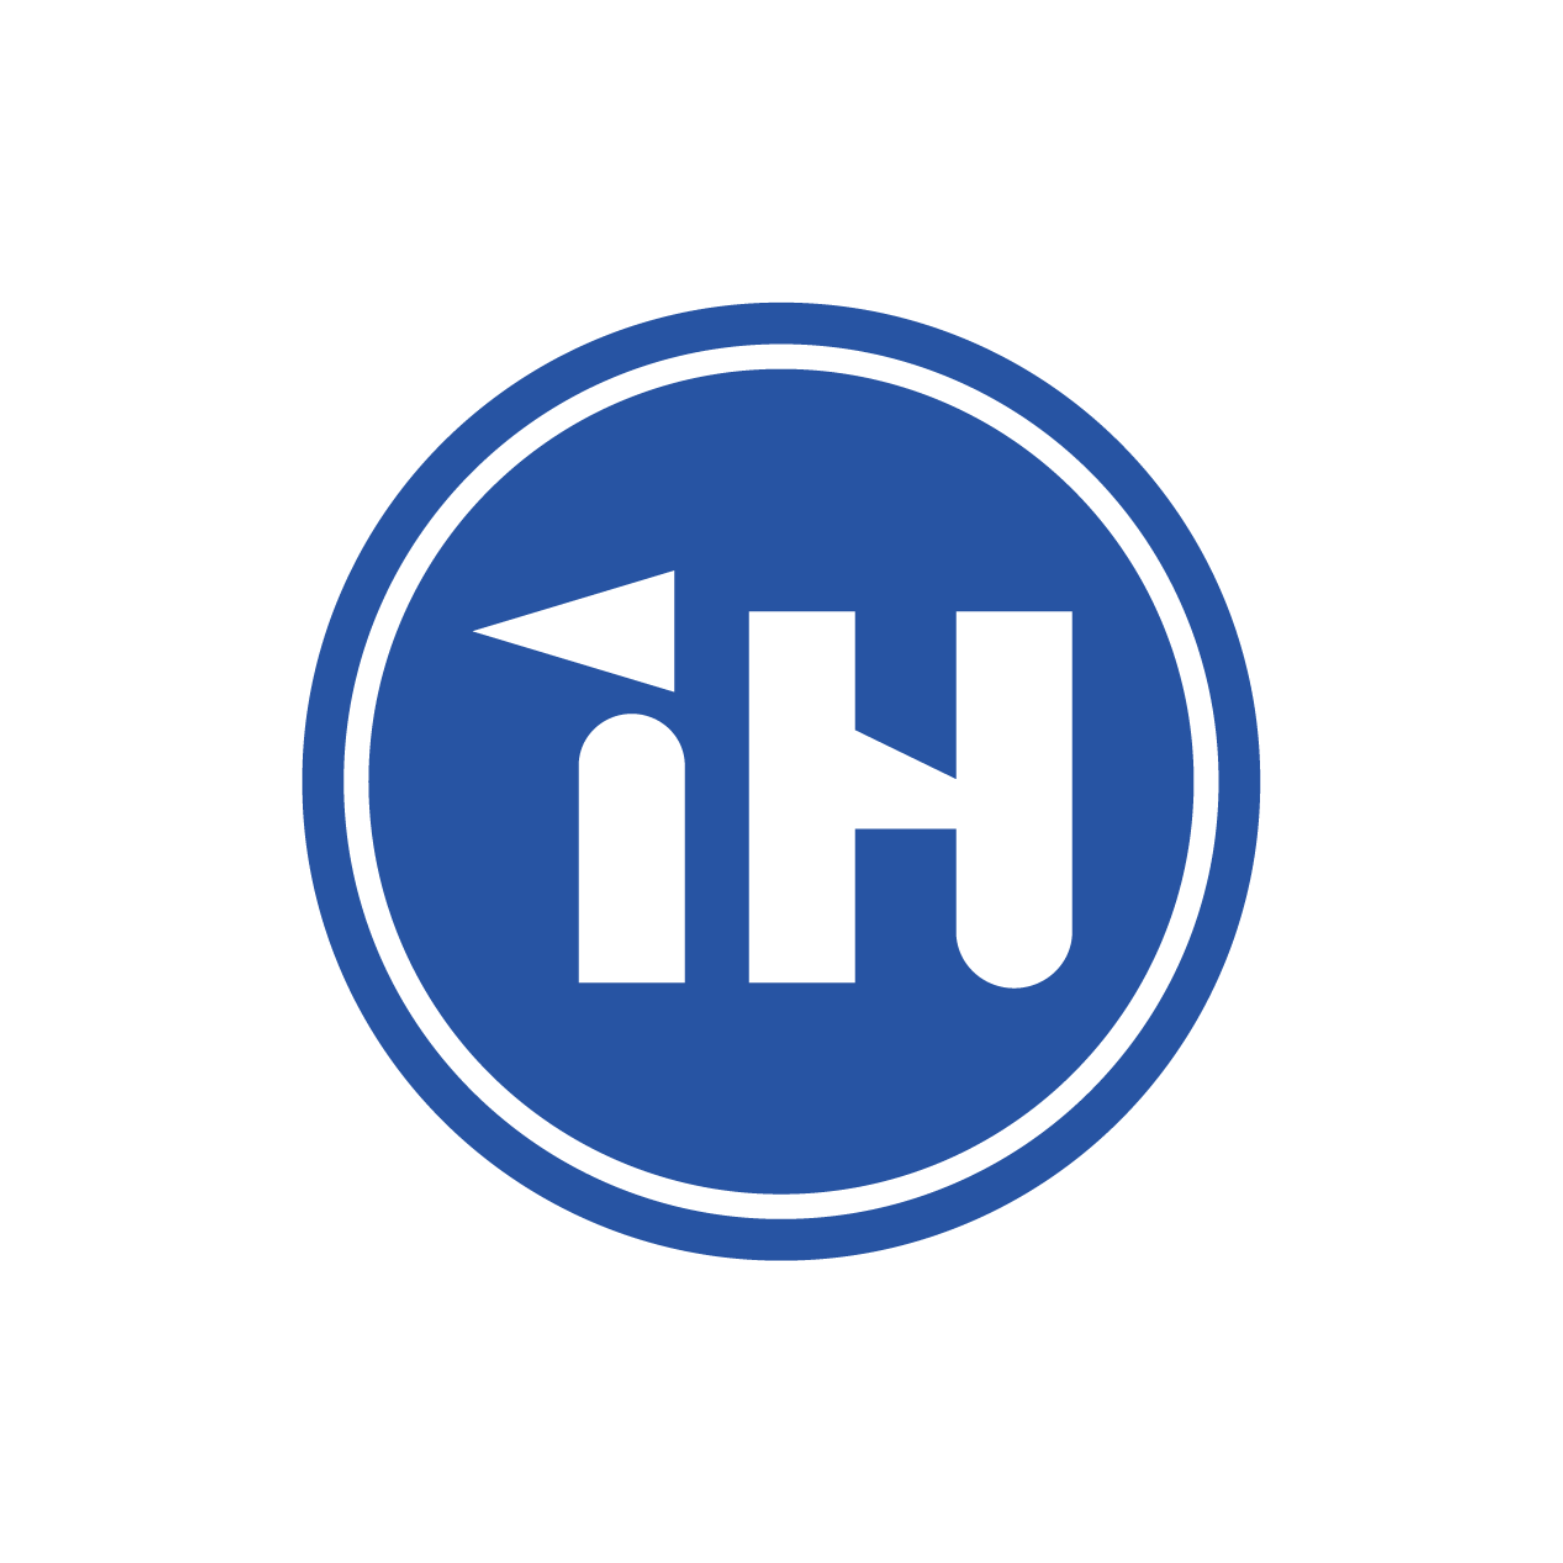 Inward Half logo https://inwardhalf.com/ golf course comfort